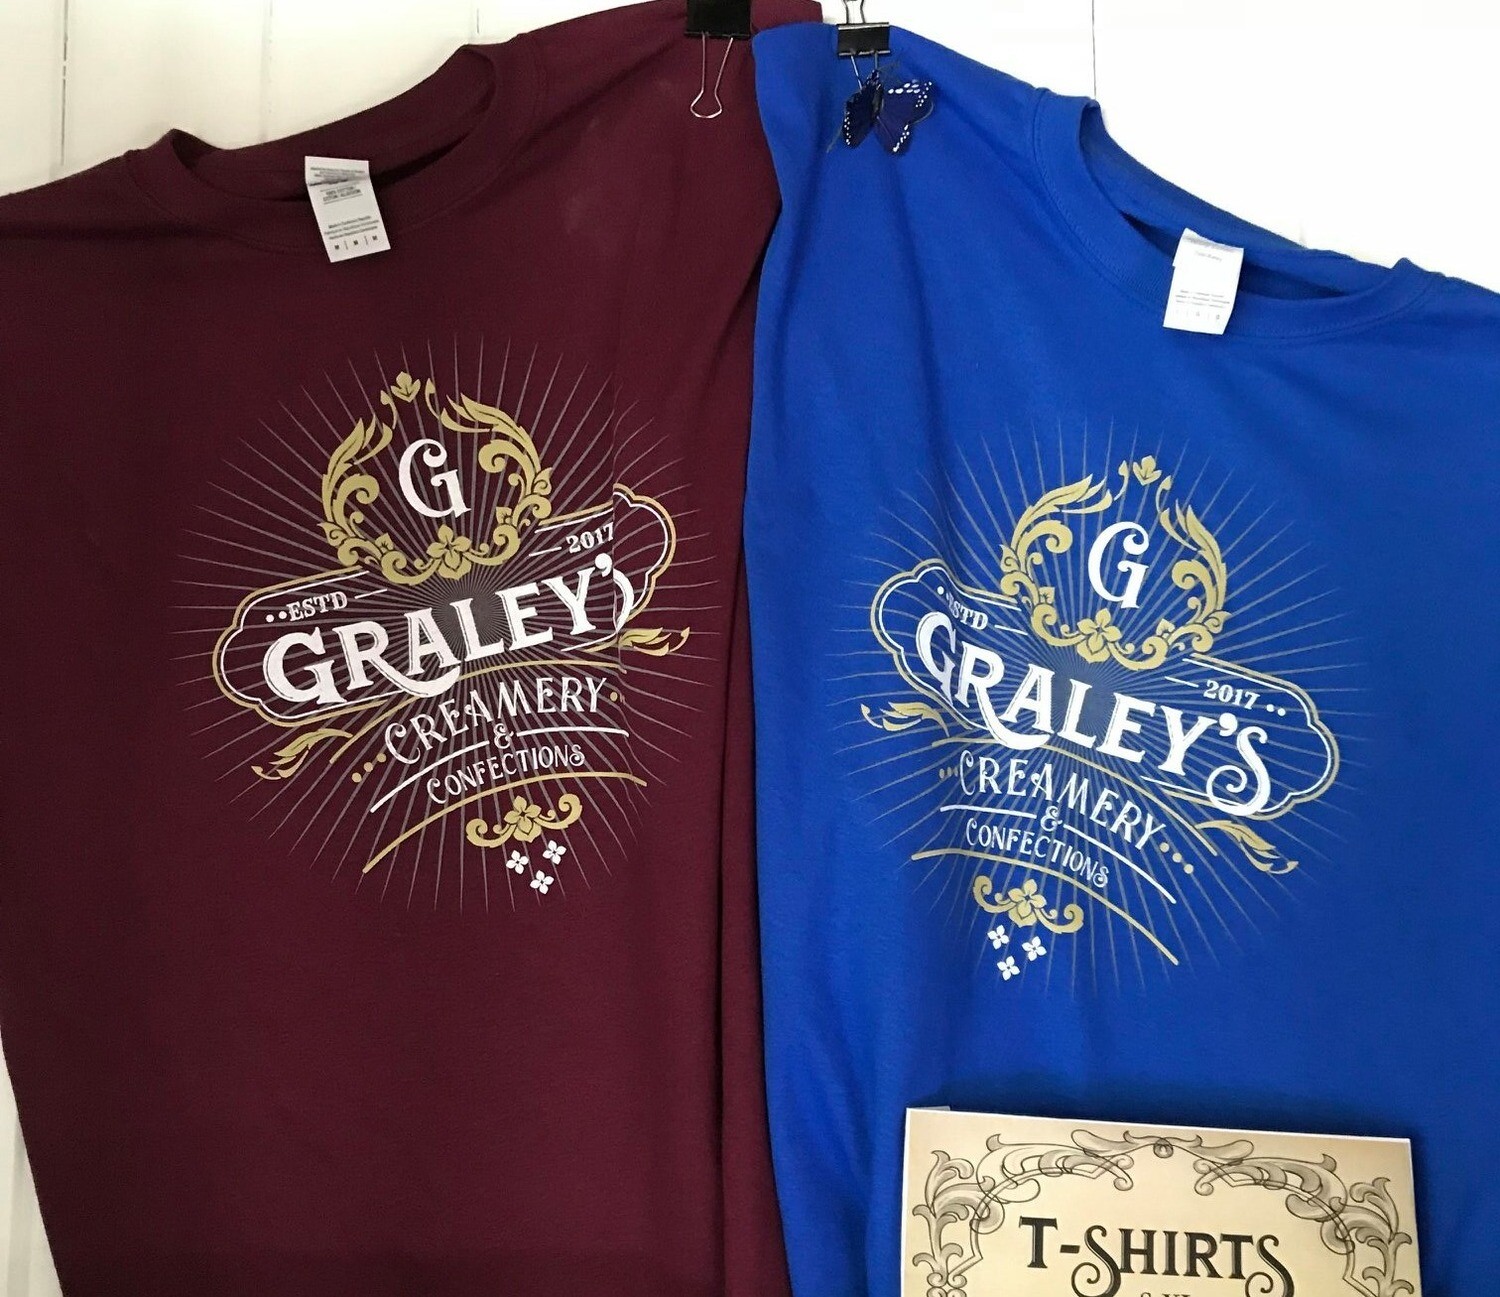 Graley's Shirt